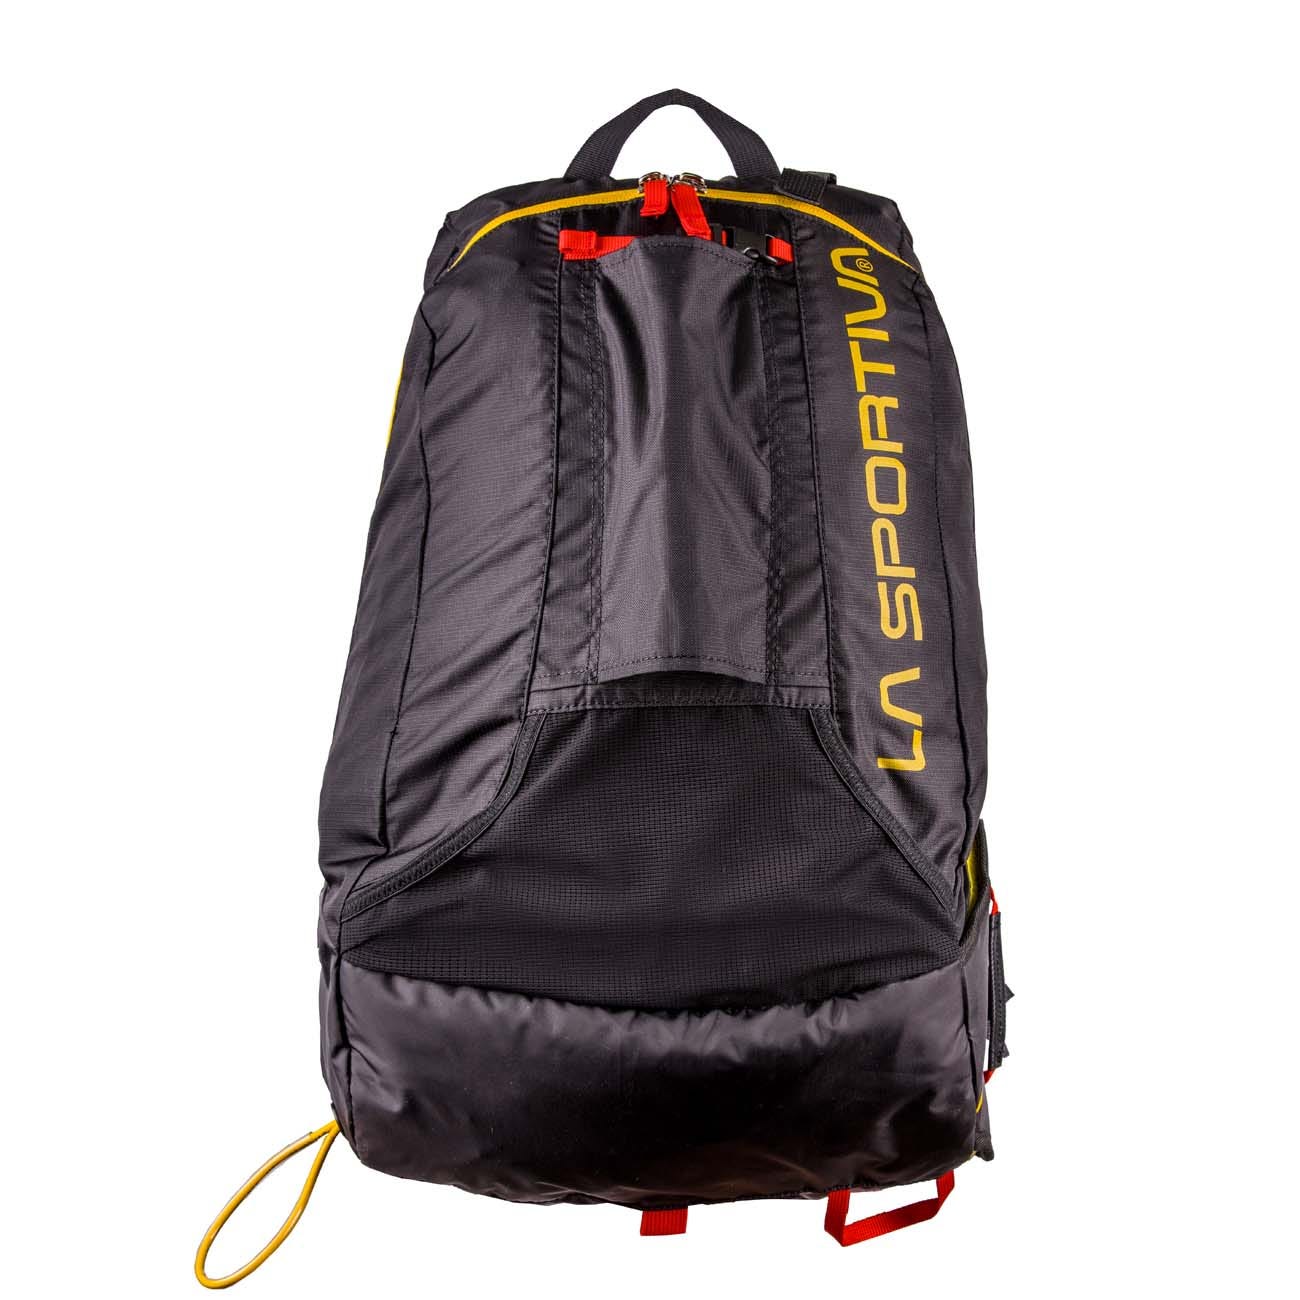 La Sportiva Skimo Race Backpack - Ski touring backpack